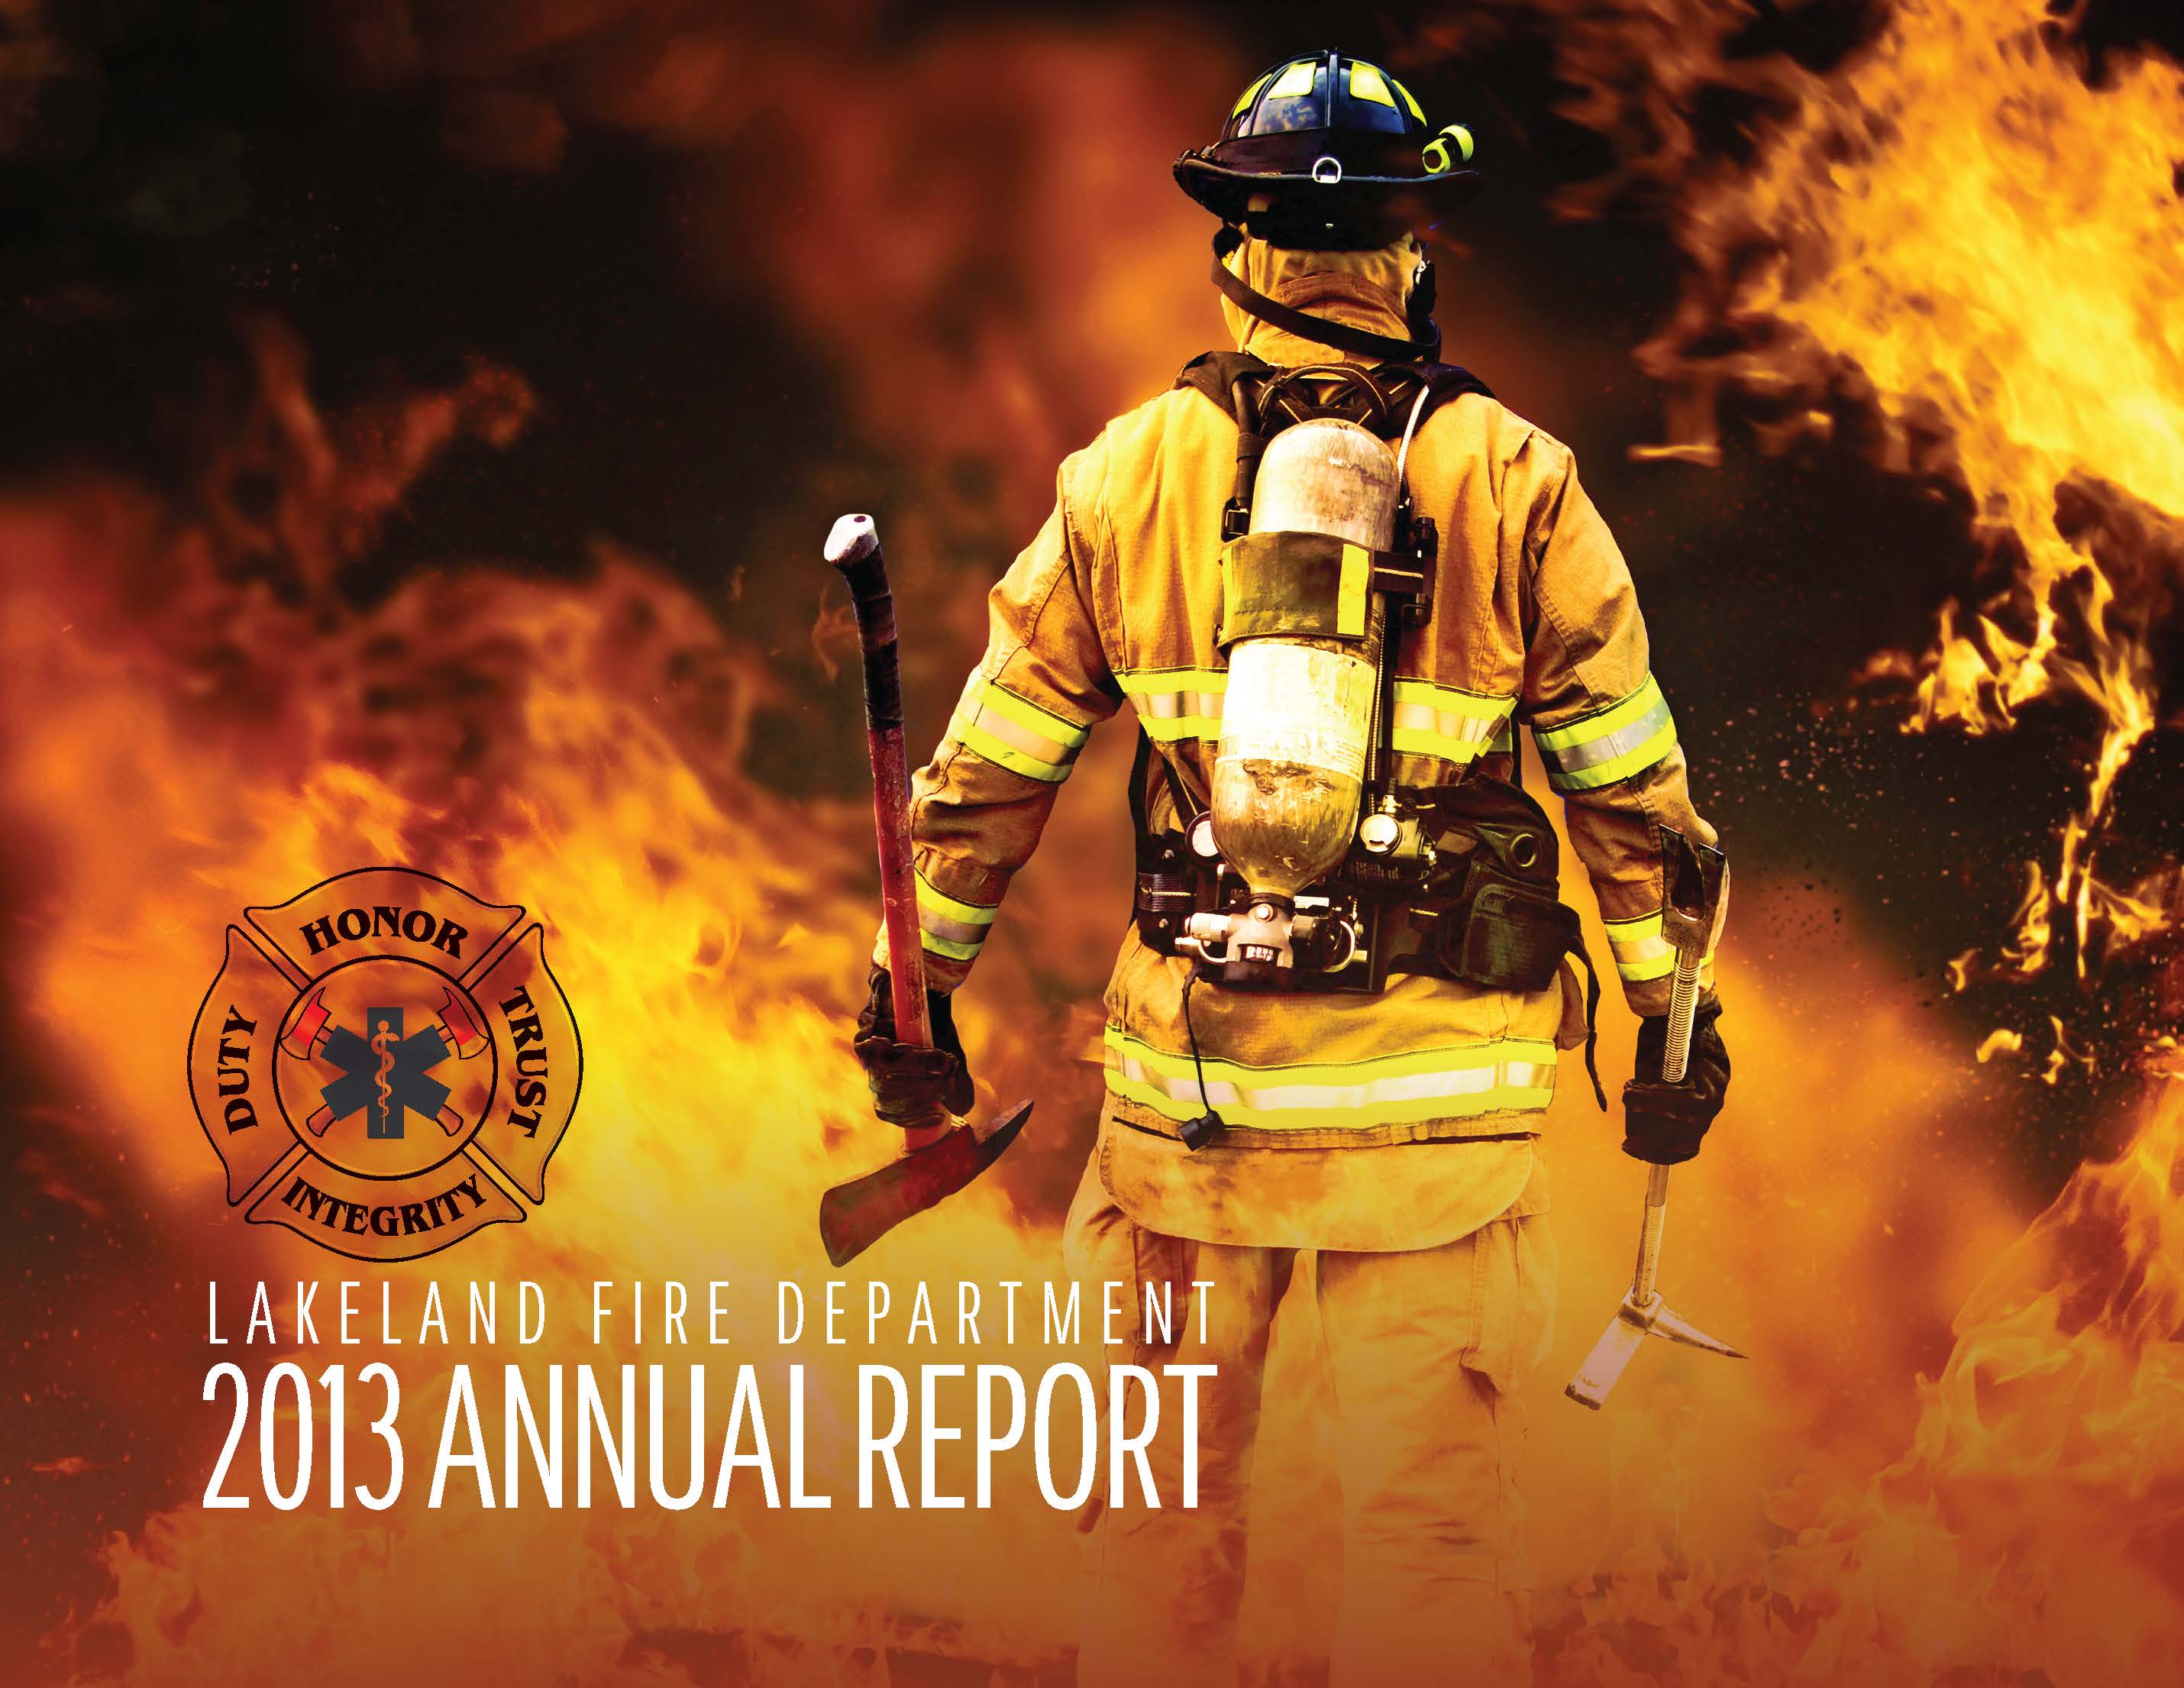 Lakeland Fire Department Annual Report 2013 